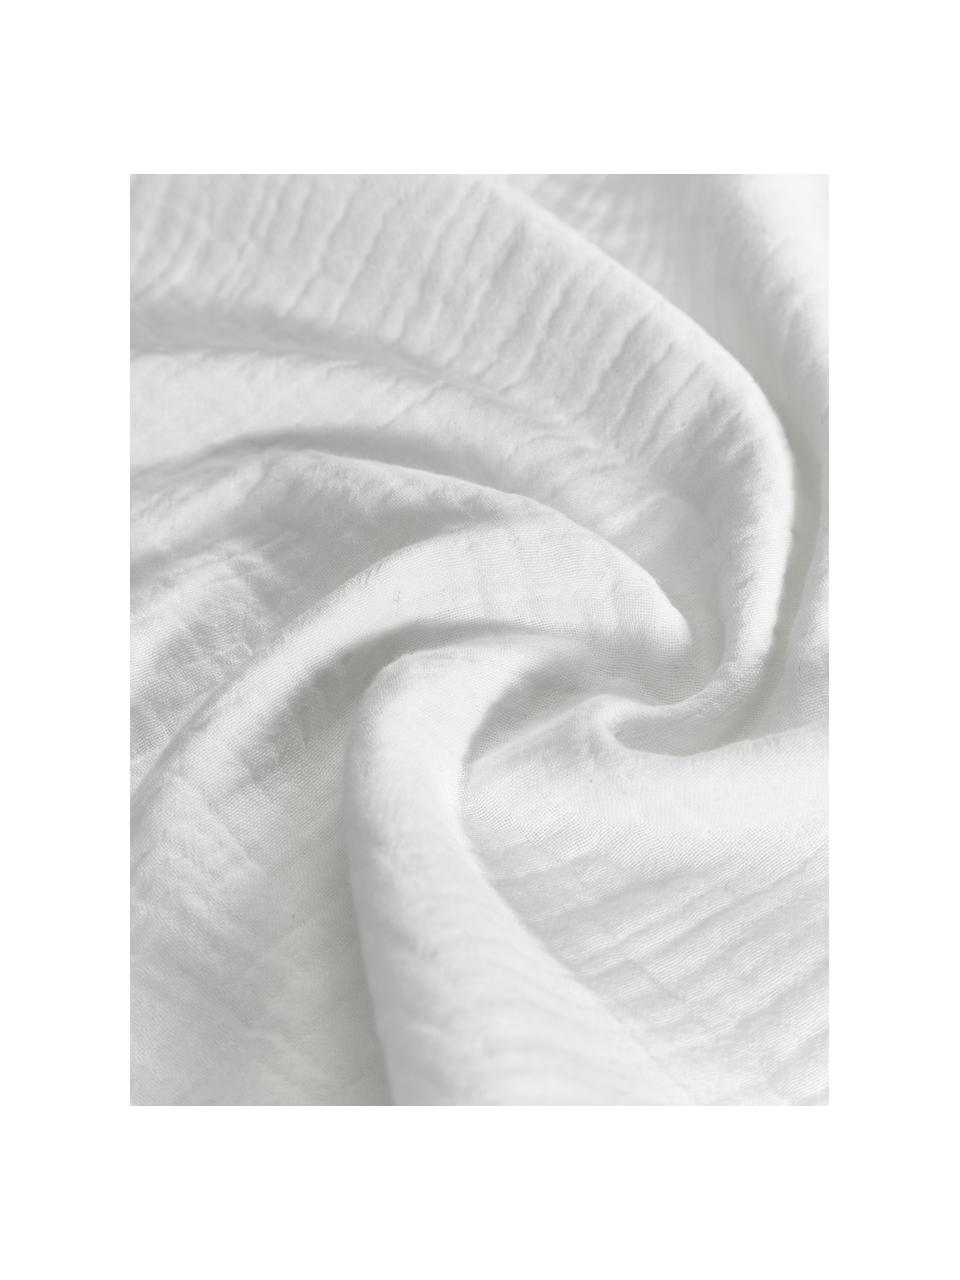 Mousseline dekbedovertrek Odile van katoen in wit, Wit, 140 cm x 200 cm